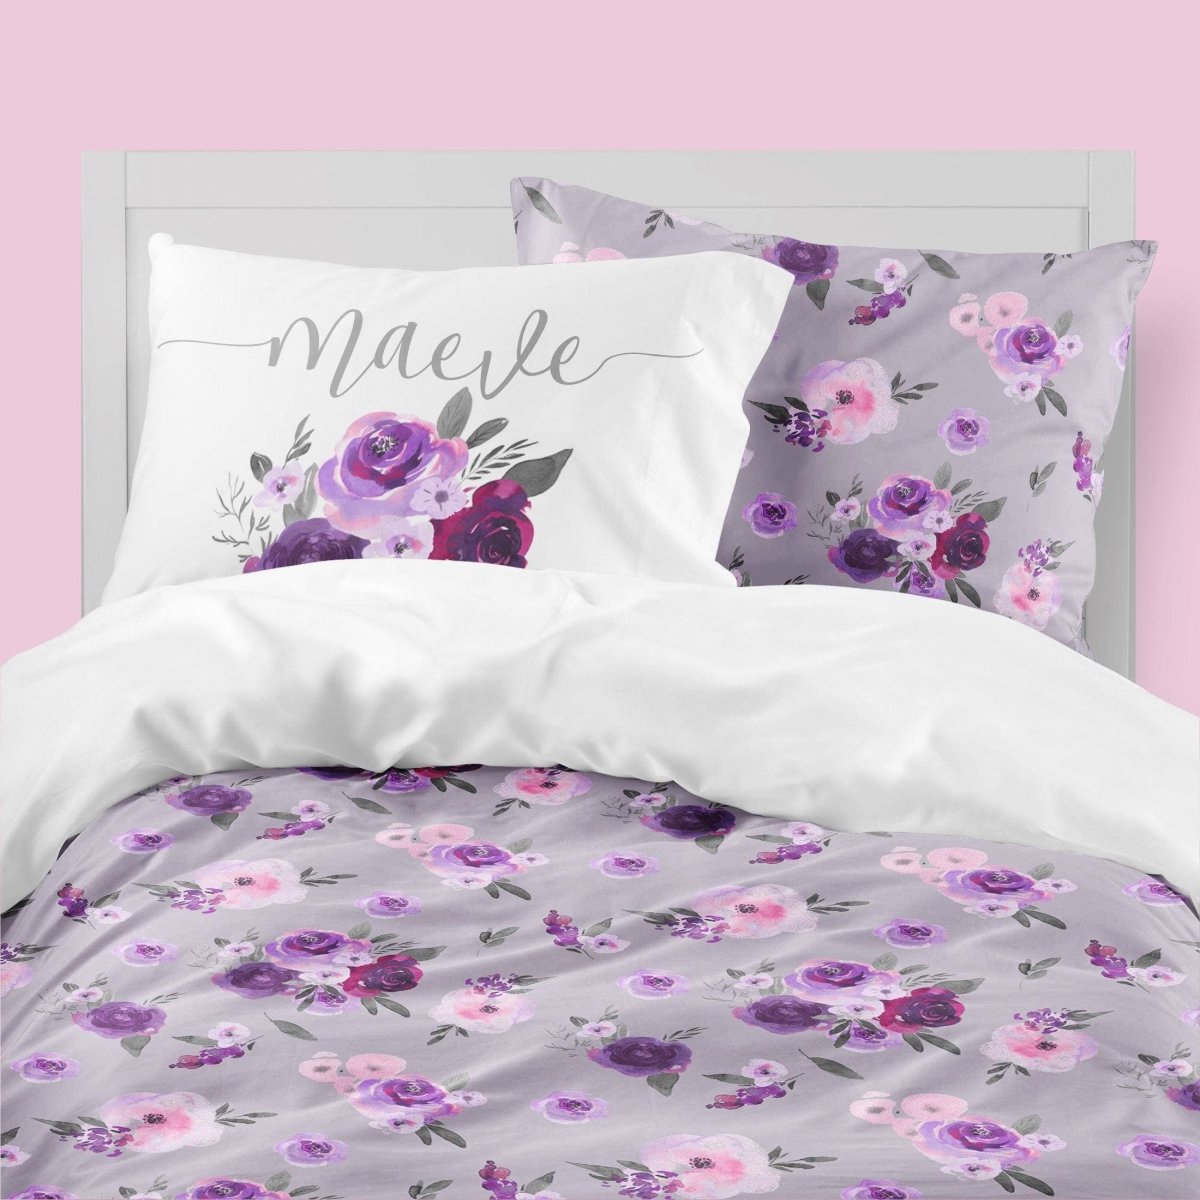 Personalized Purple Floral Kids Bedding Set (Comforter or Duvet Cover) - gender_girl, Purple Floral, text